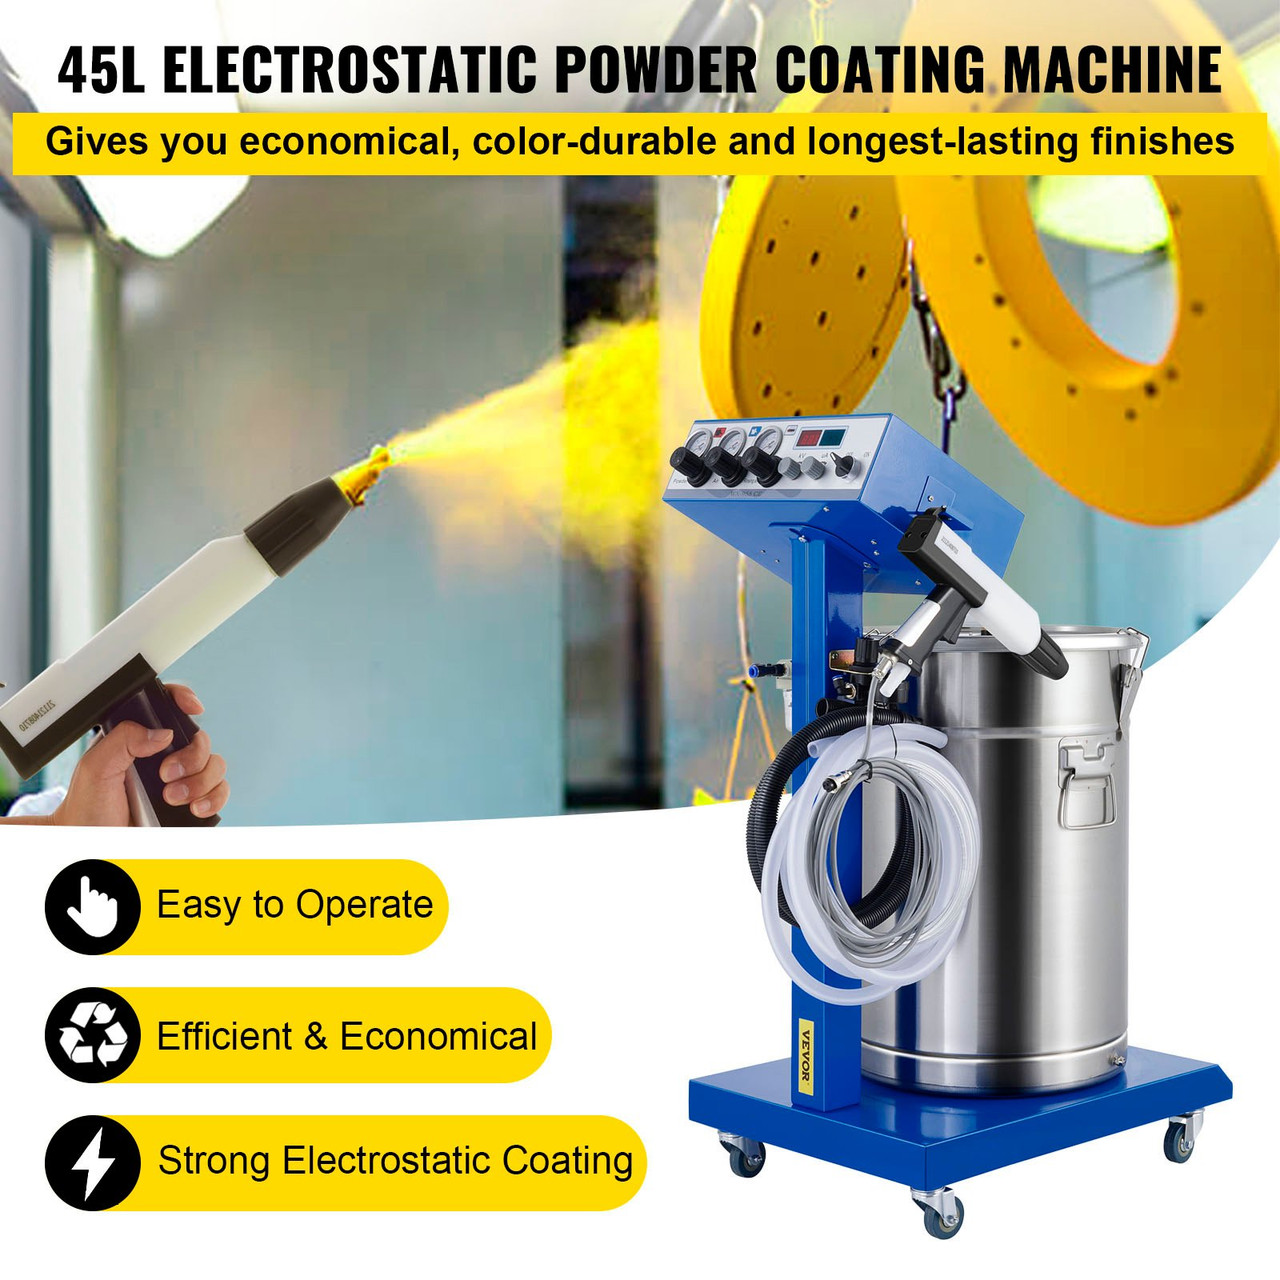 50W 45L Electrostatic Powder Coating Machine with Spraying Gun Paint 450g Per Minute WX-958 Powder Coating System (50W 45L)